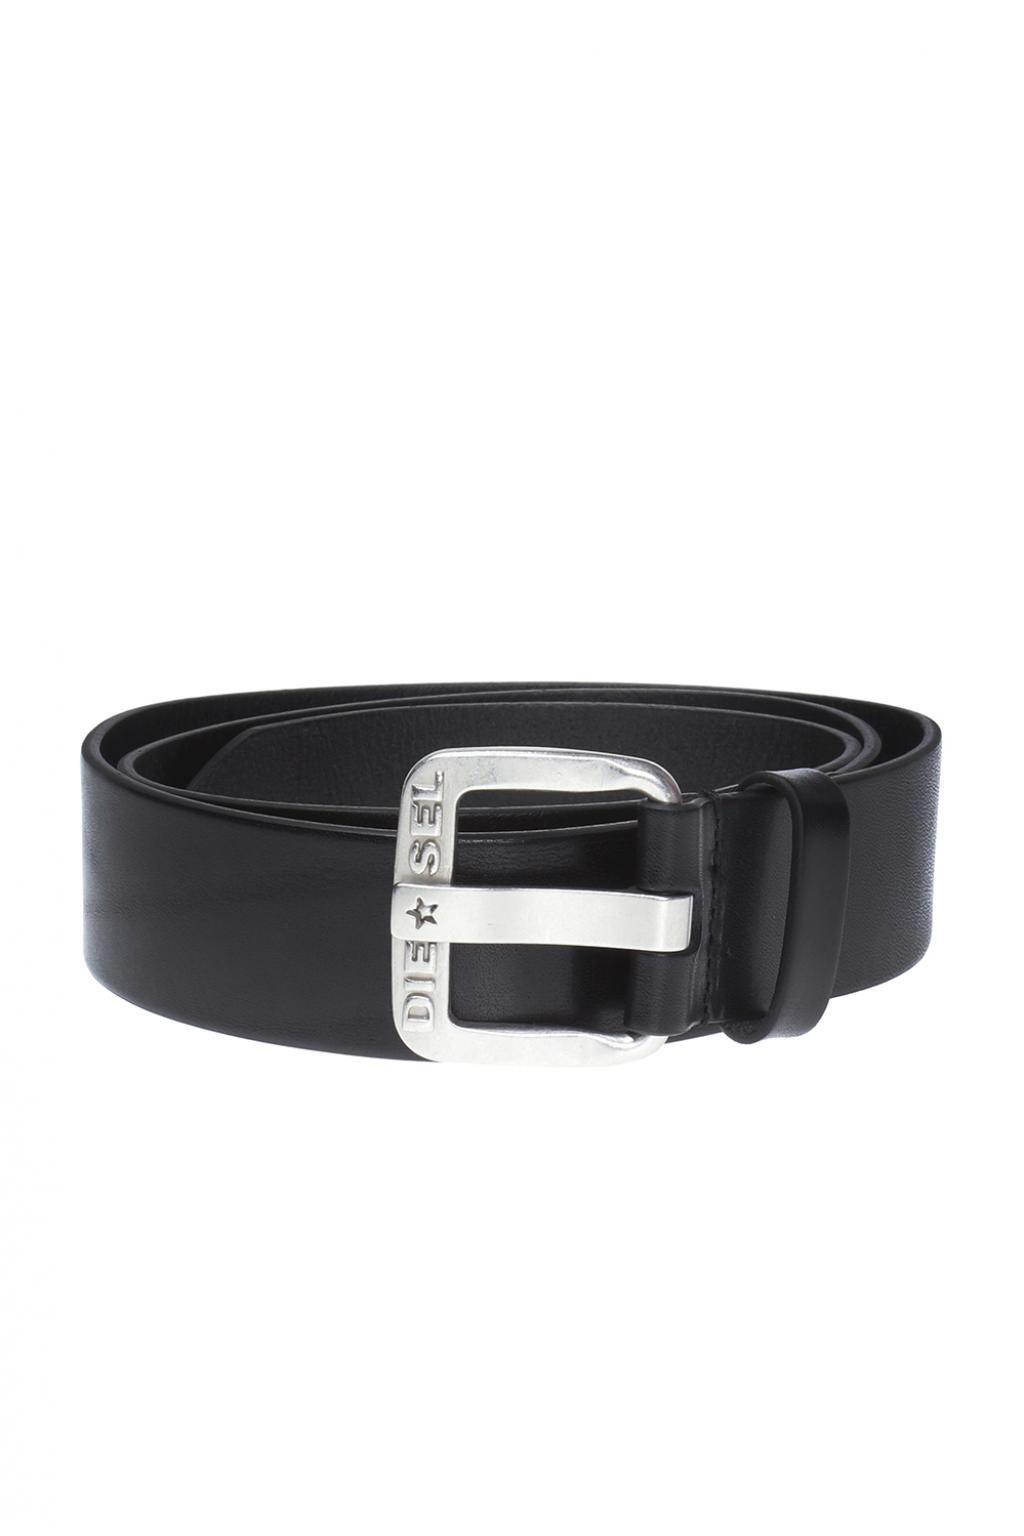 DIESEL Leather Belt With Logo in Brown Black (Black) for Men - Lyst